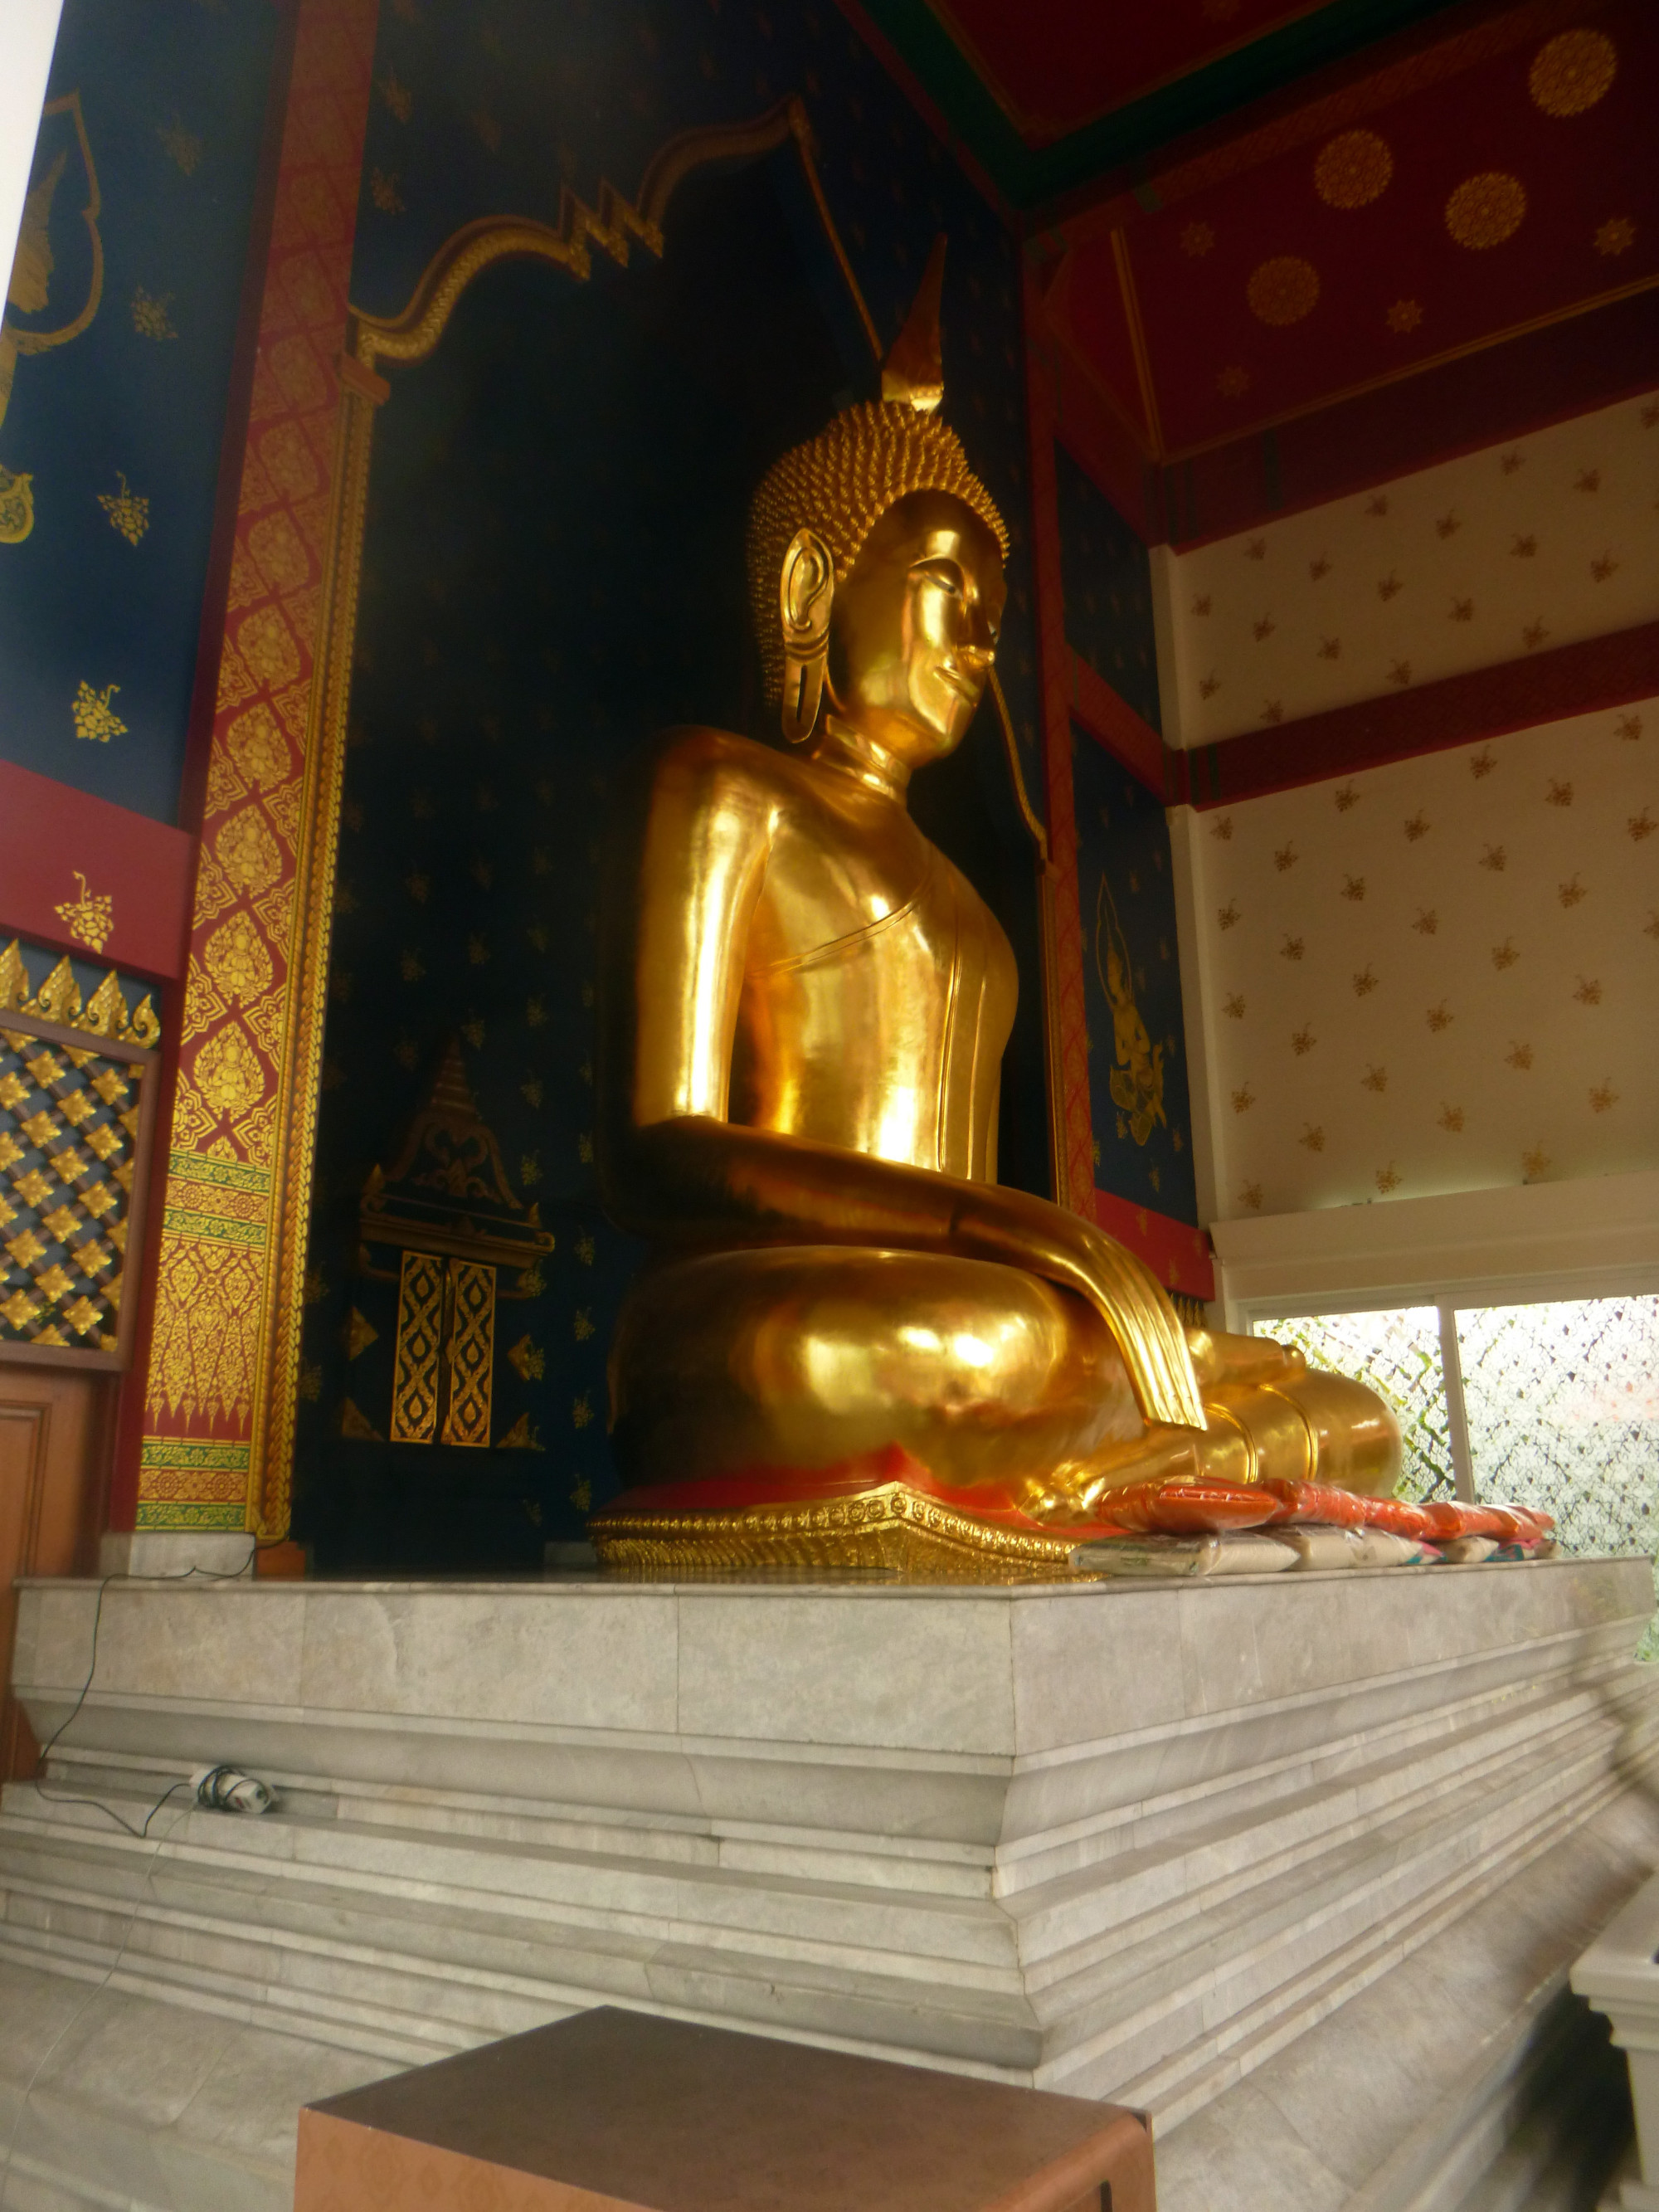 Seated Golden Buddha